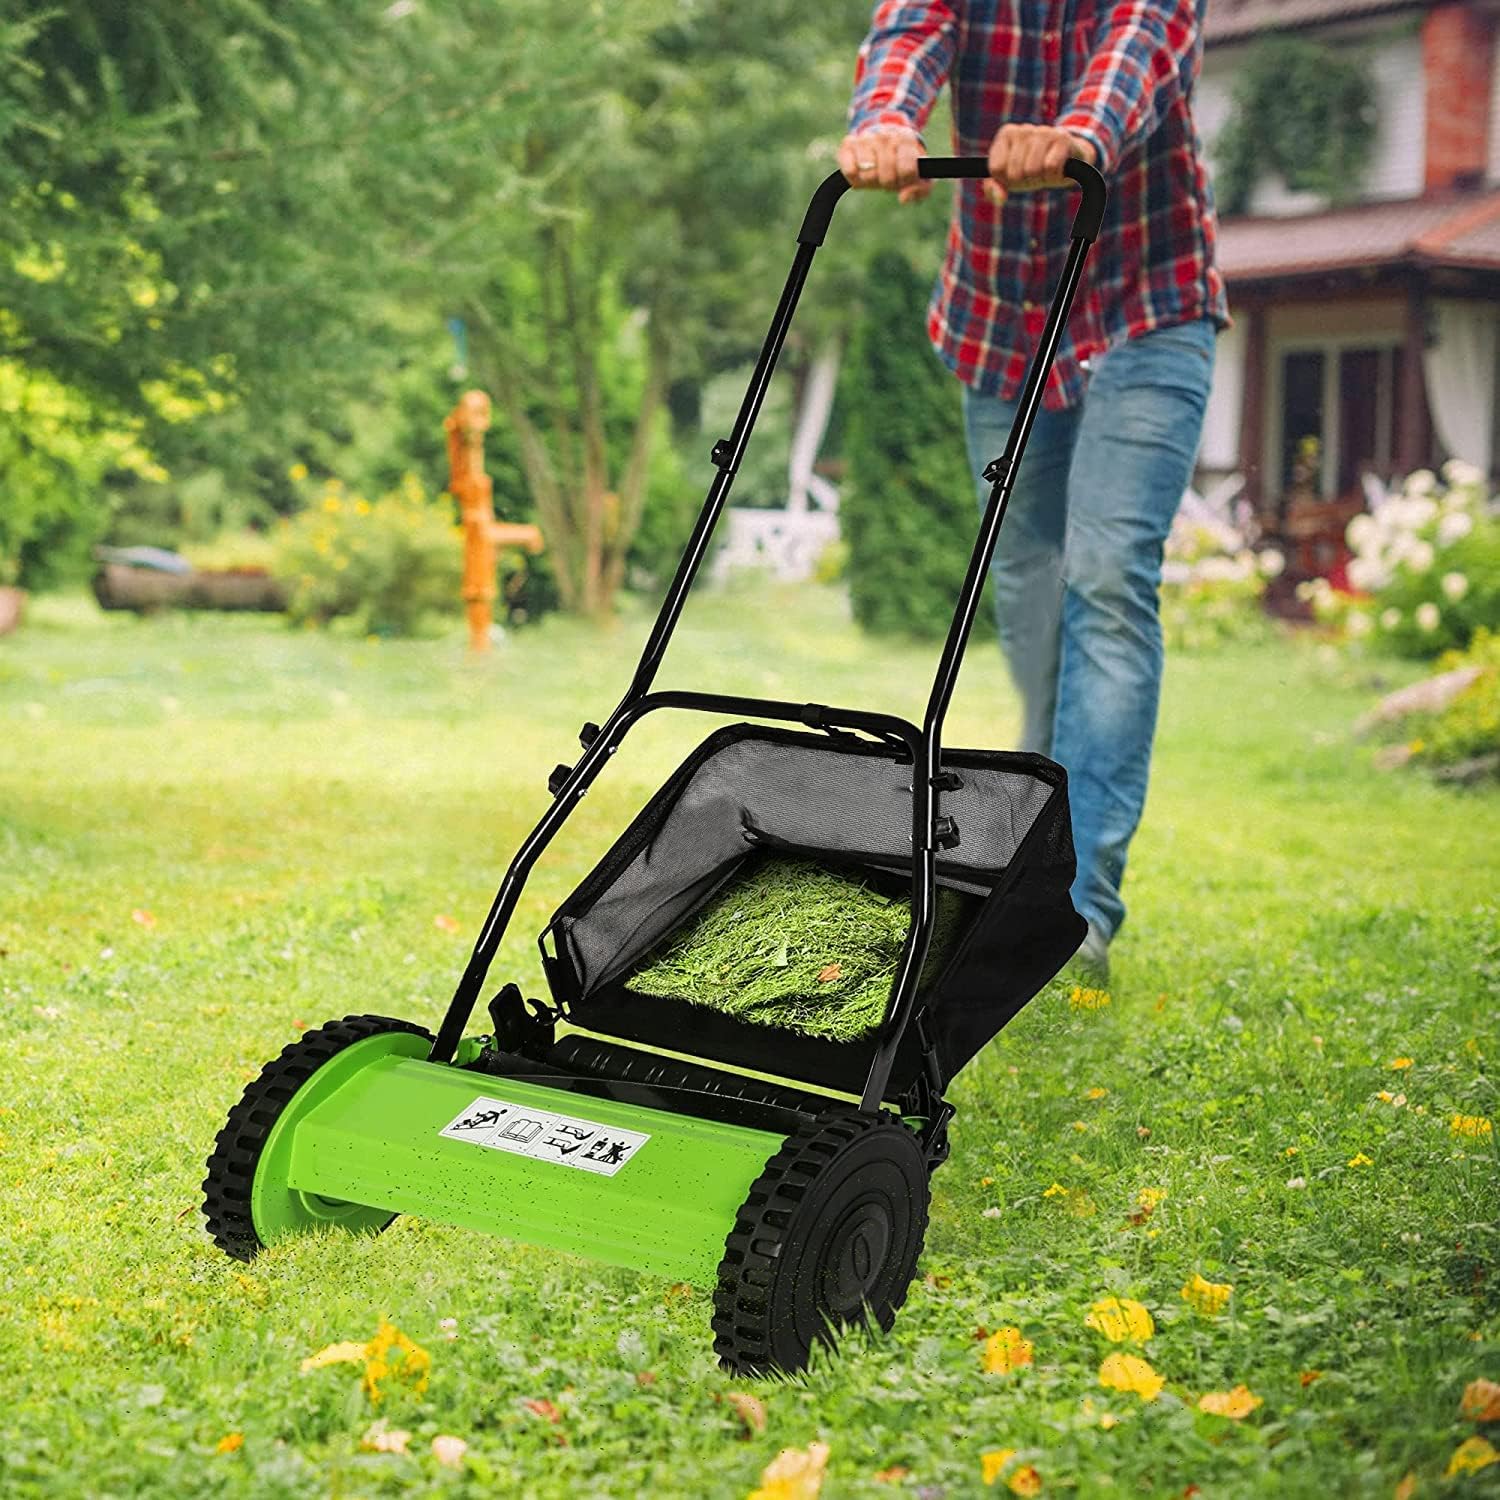 16" Push Cordless Lawn Mower 5-Blade Manual Walk-behind Mower with Detachable Grass Catcher, 2 Wheels